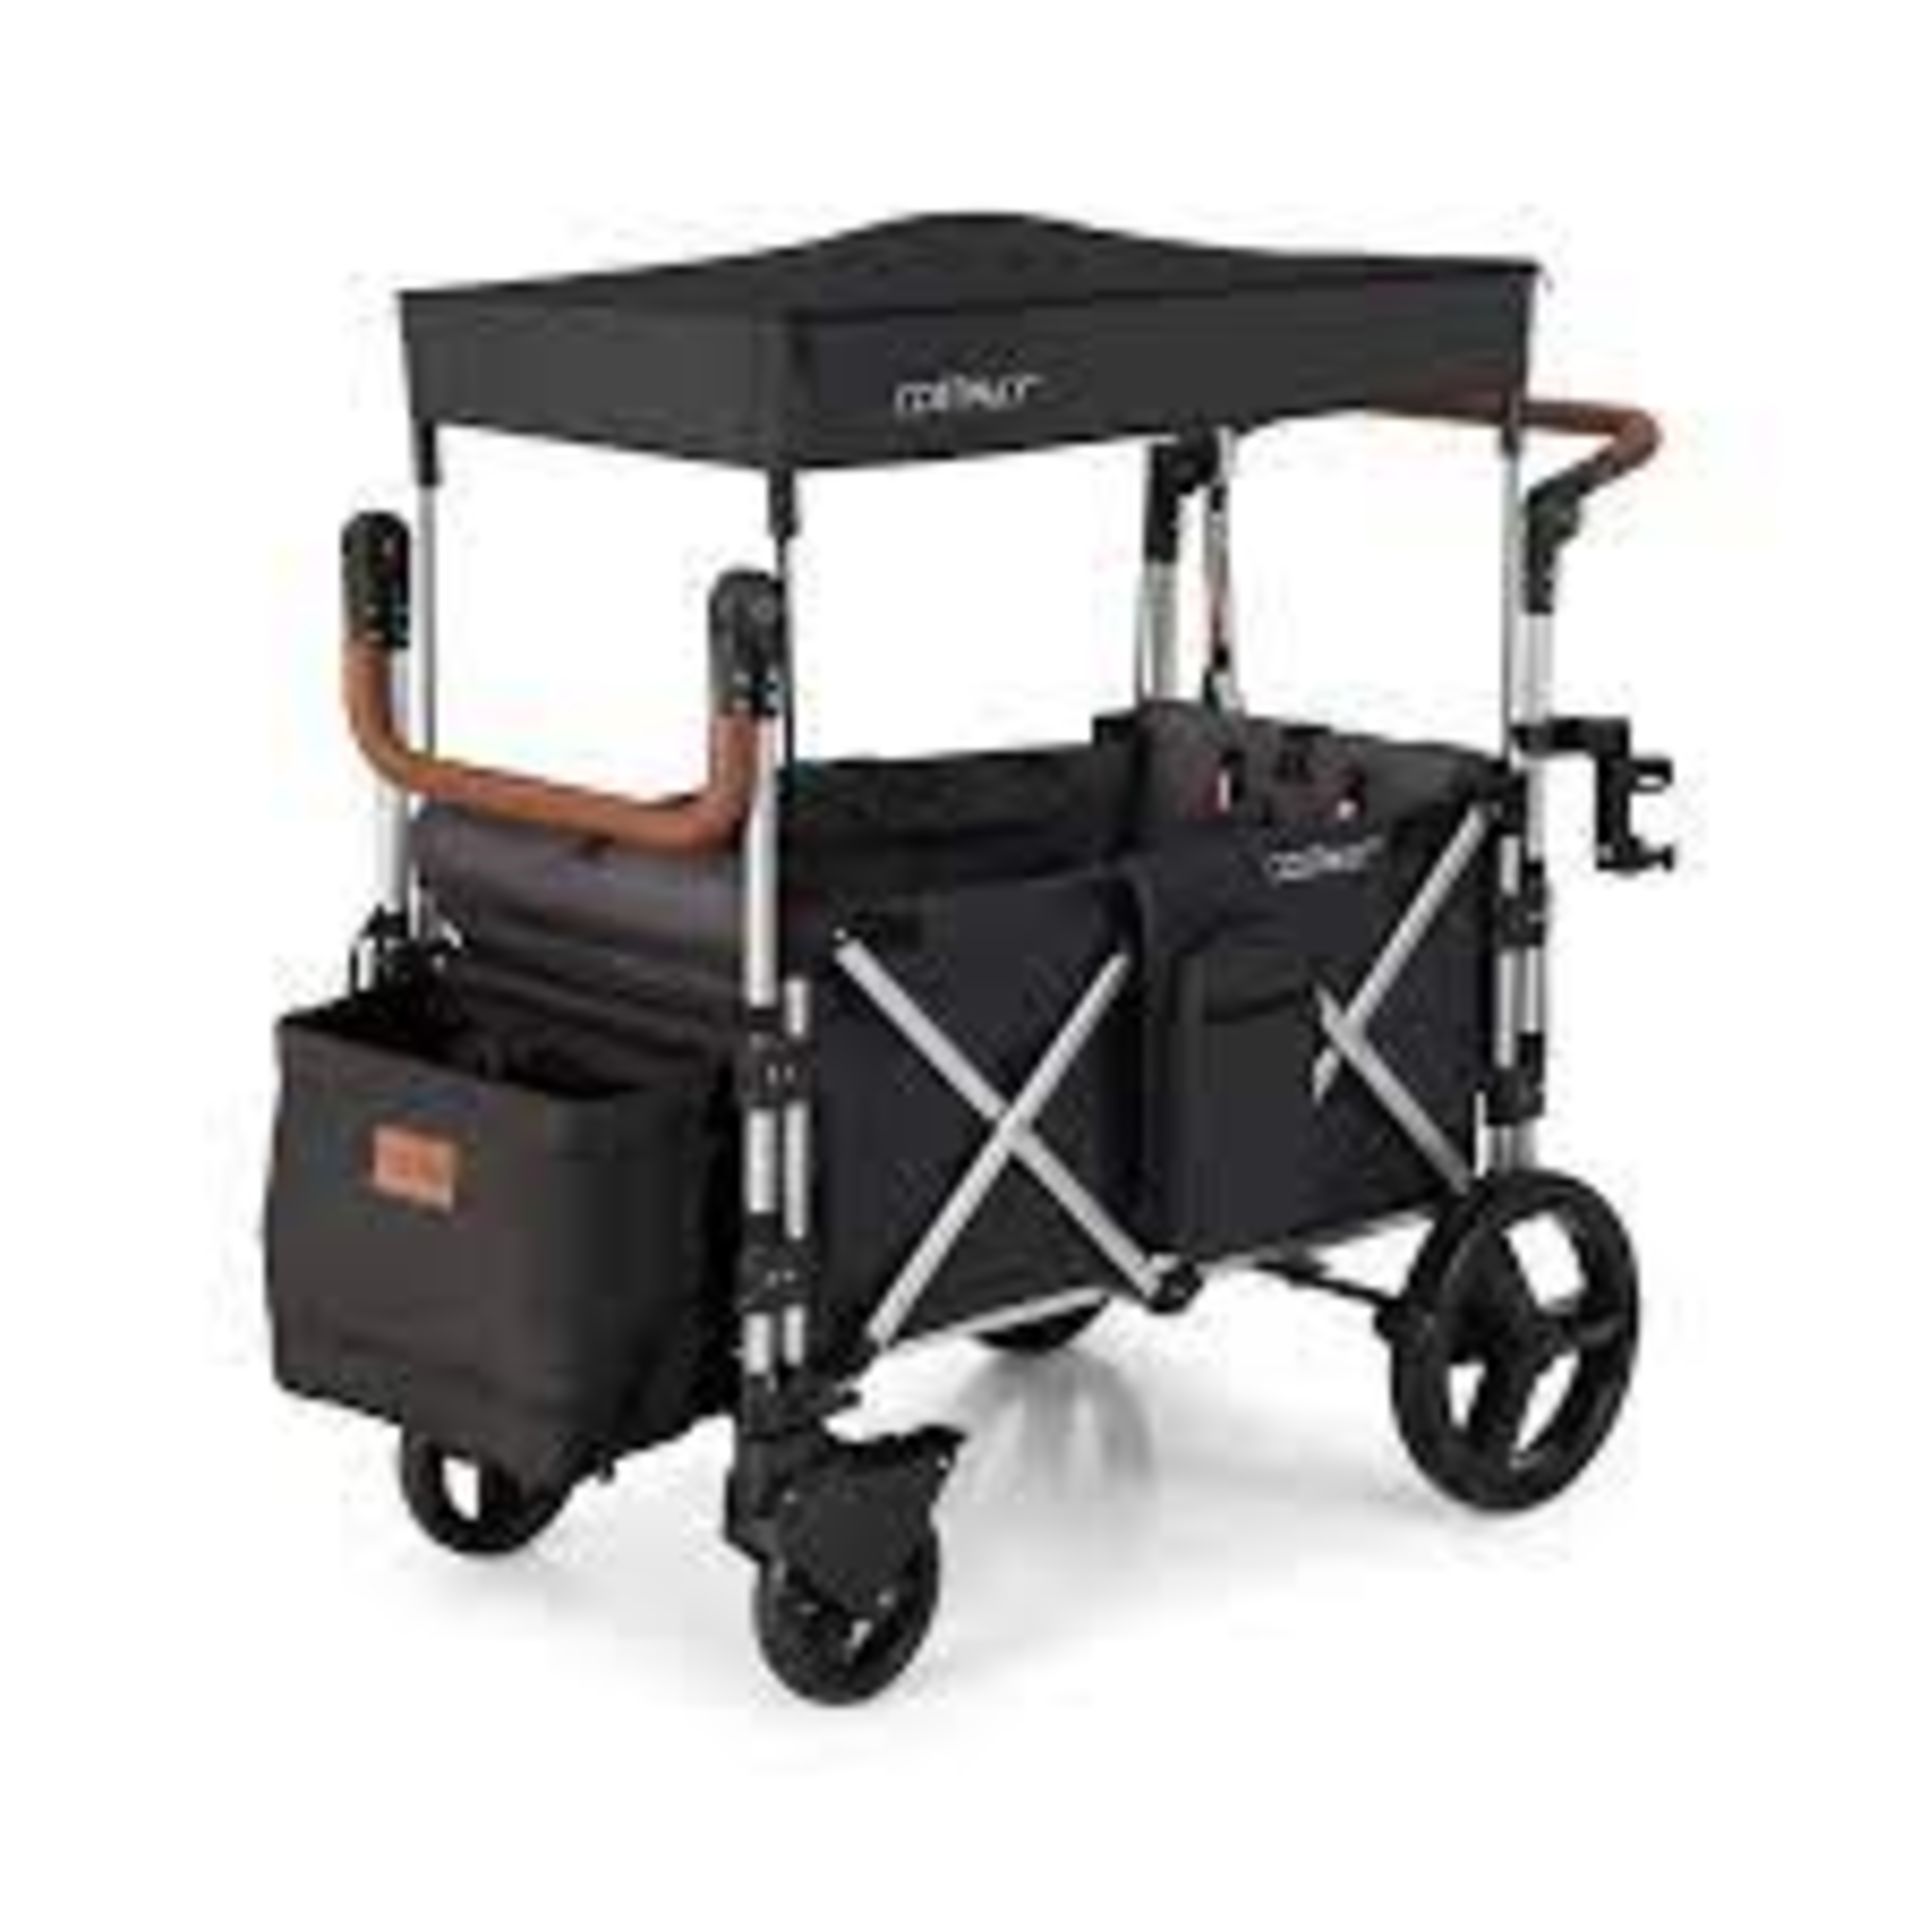 Twin Baby Double Stroller Wagon Push Pull Stroller-Black - ER54